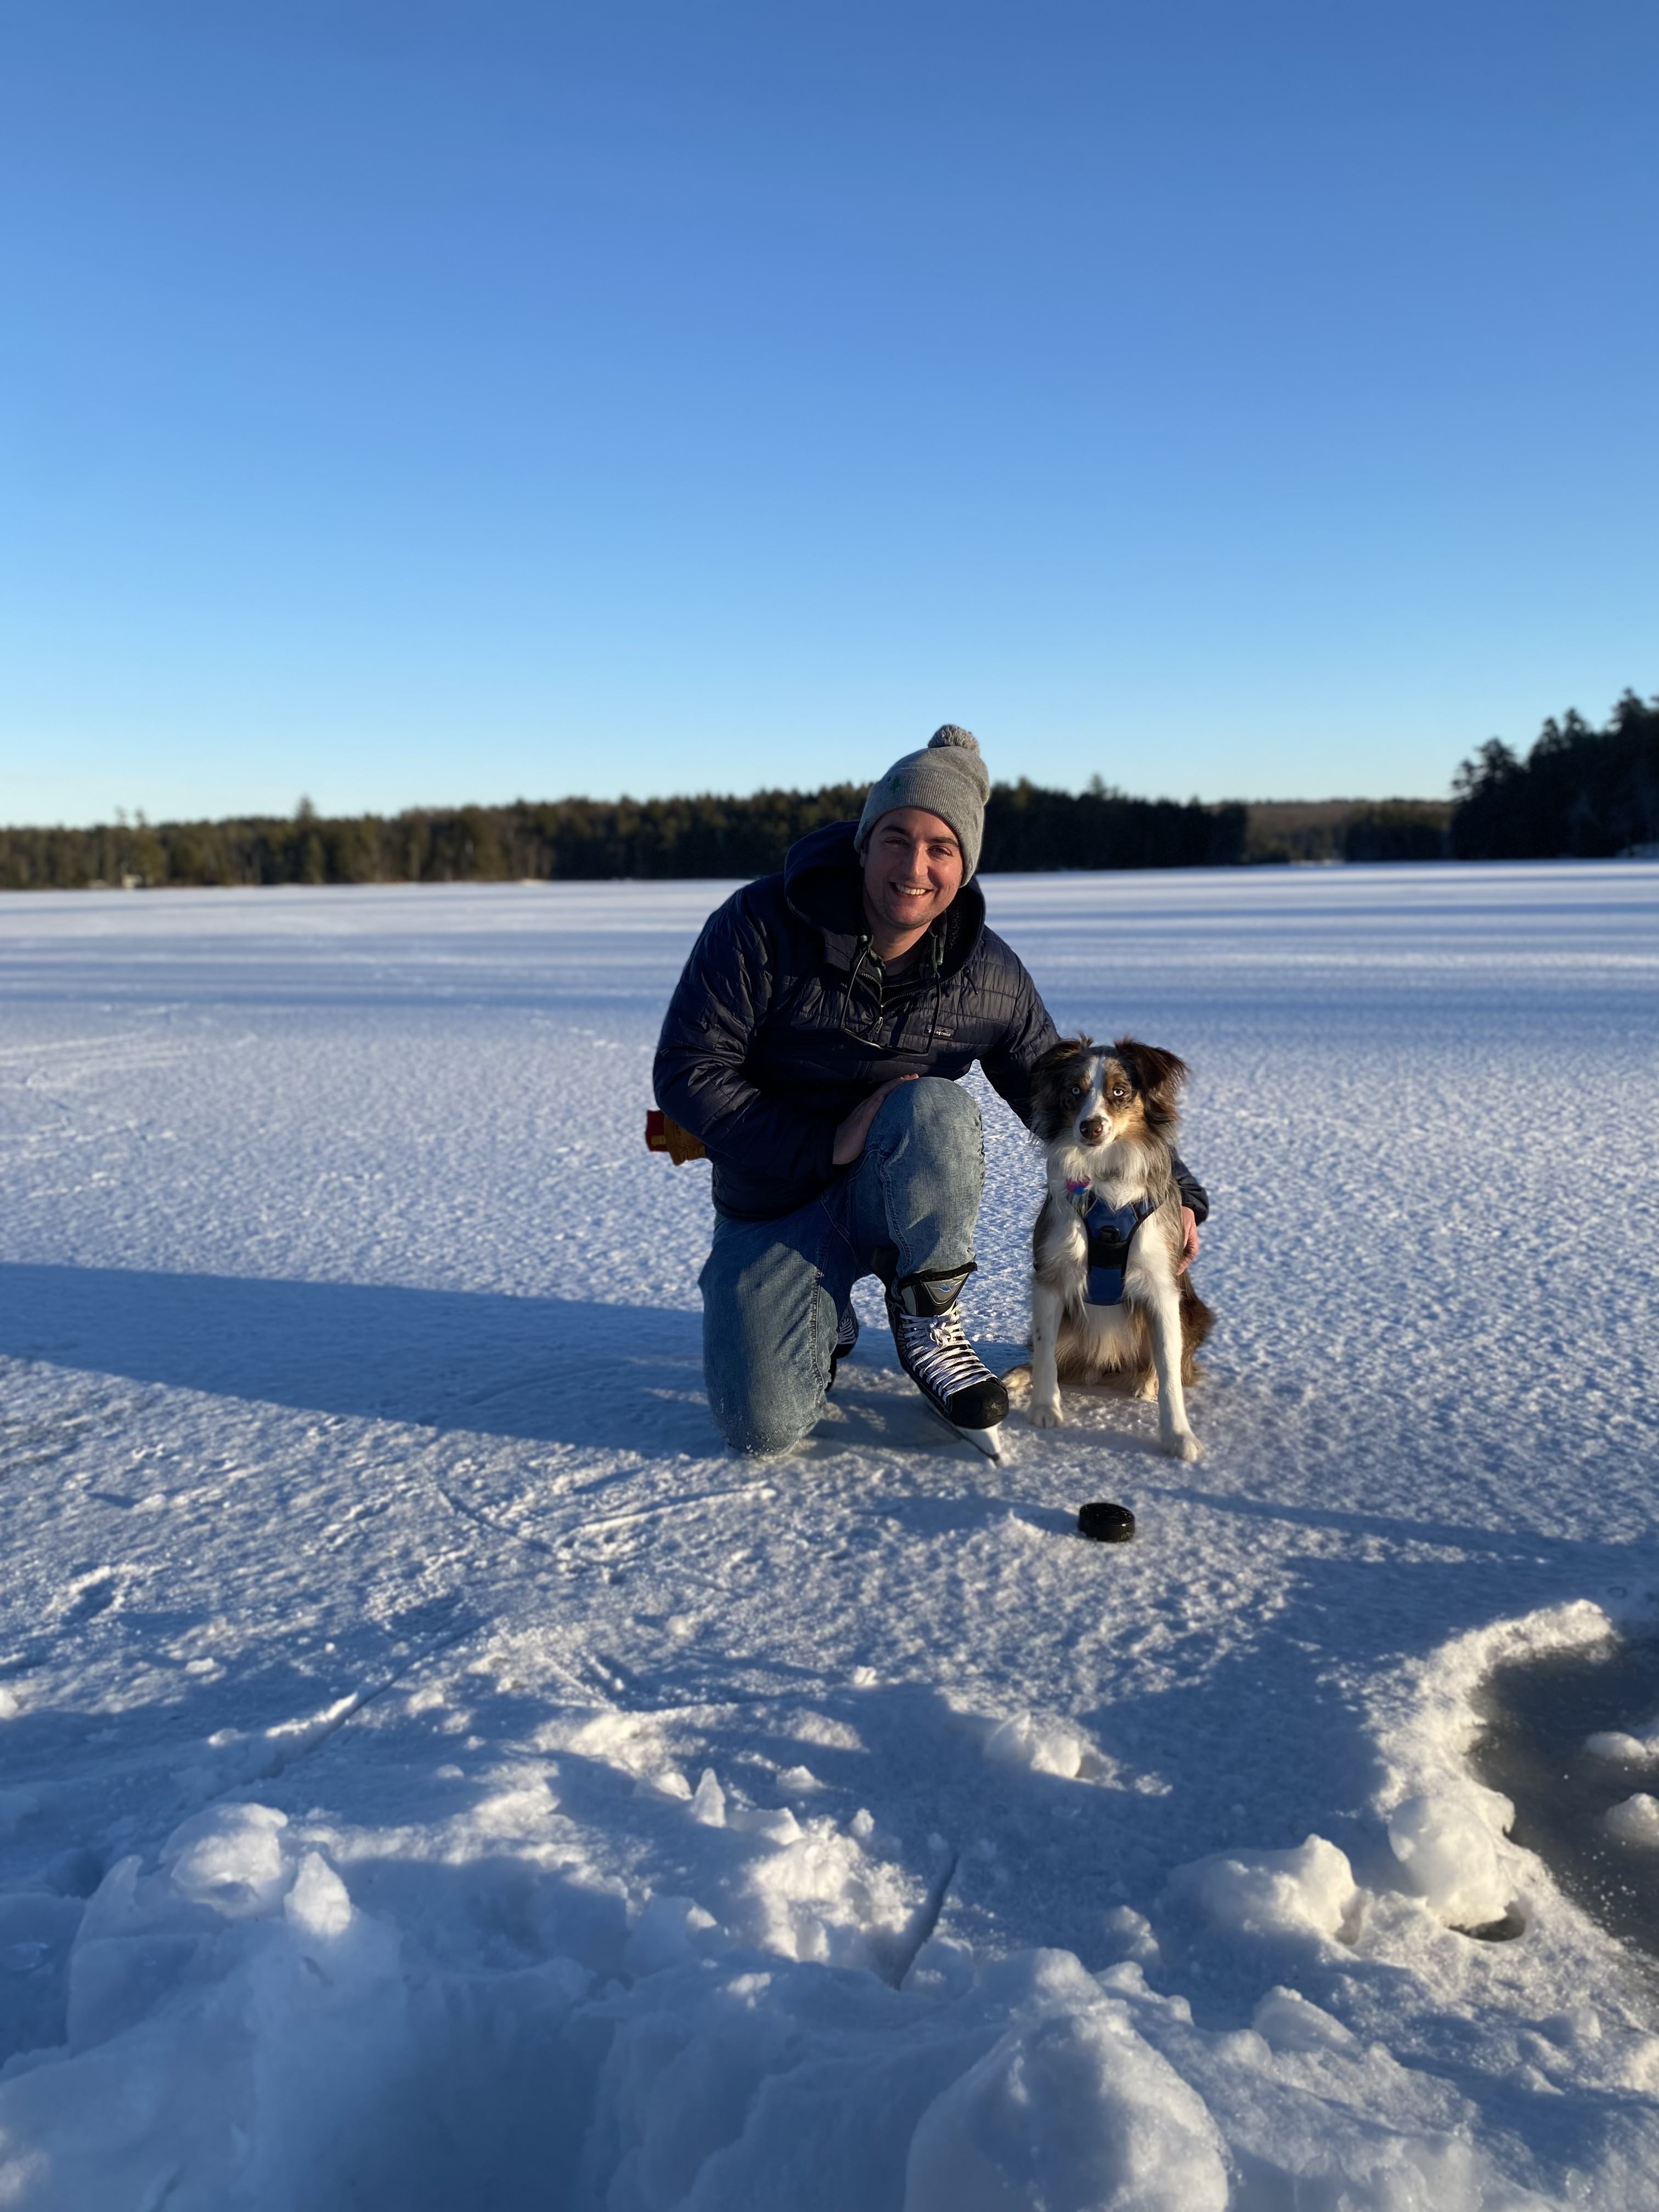 Sam Freccia and dog in snow